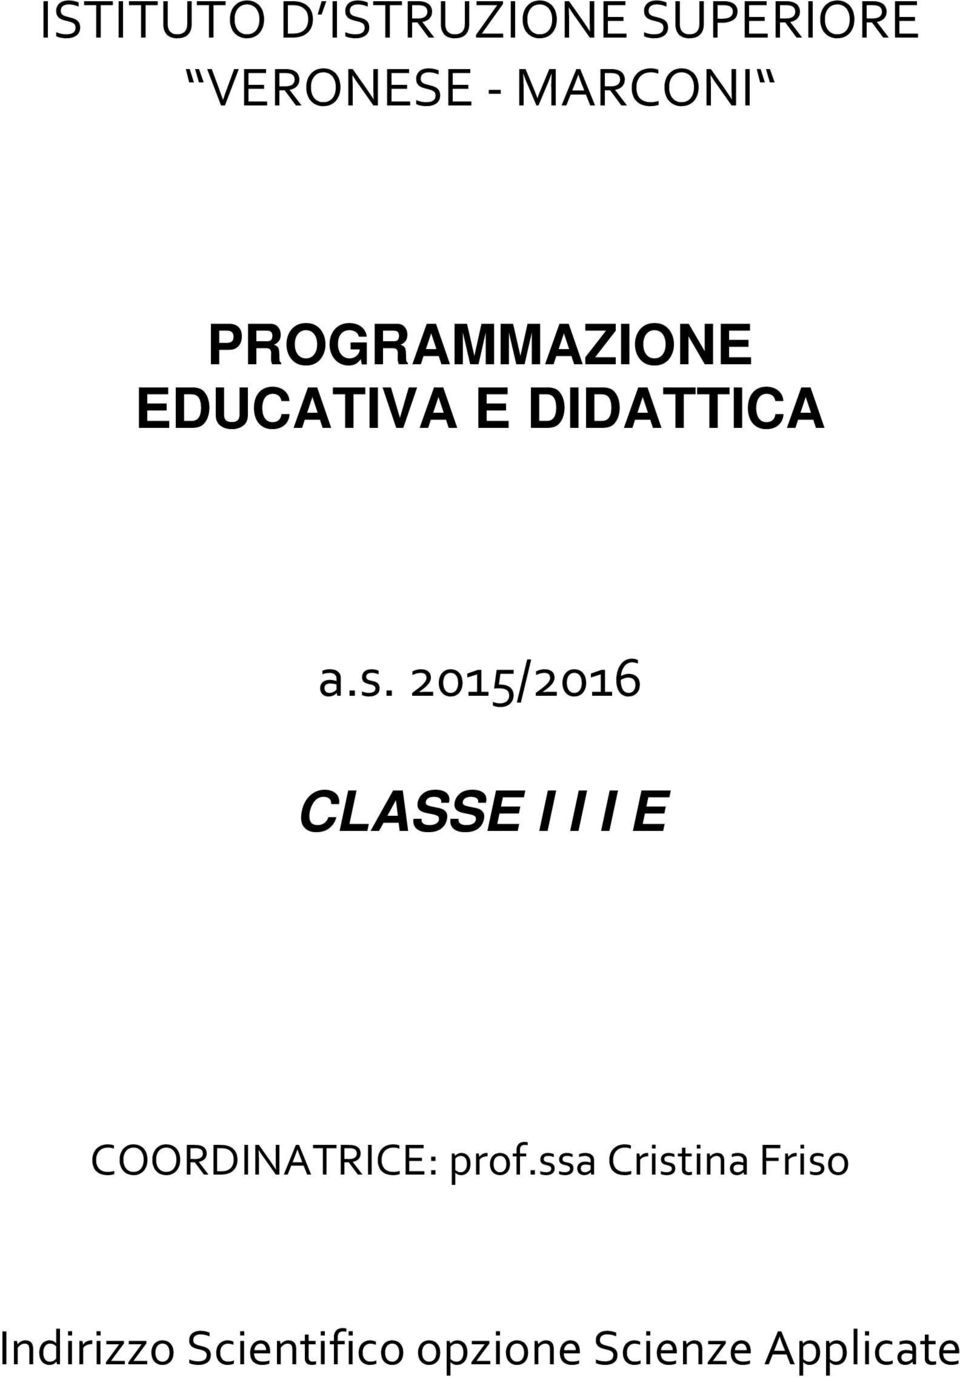 2015/2016 CLASSE I I I E COORDINATRICE: prof.